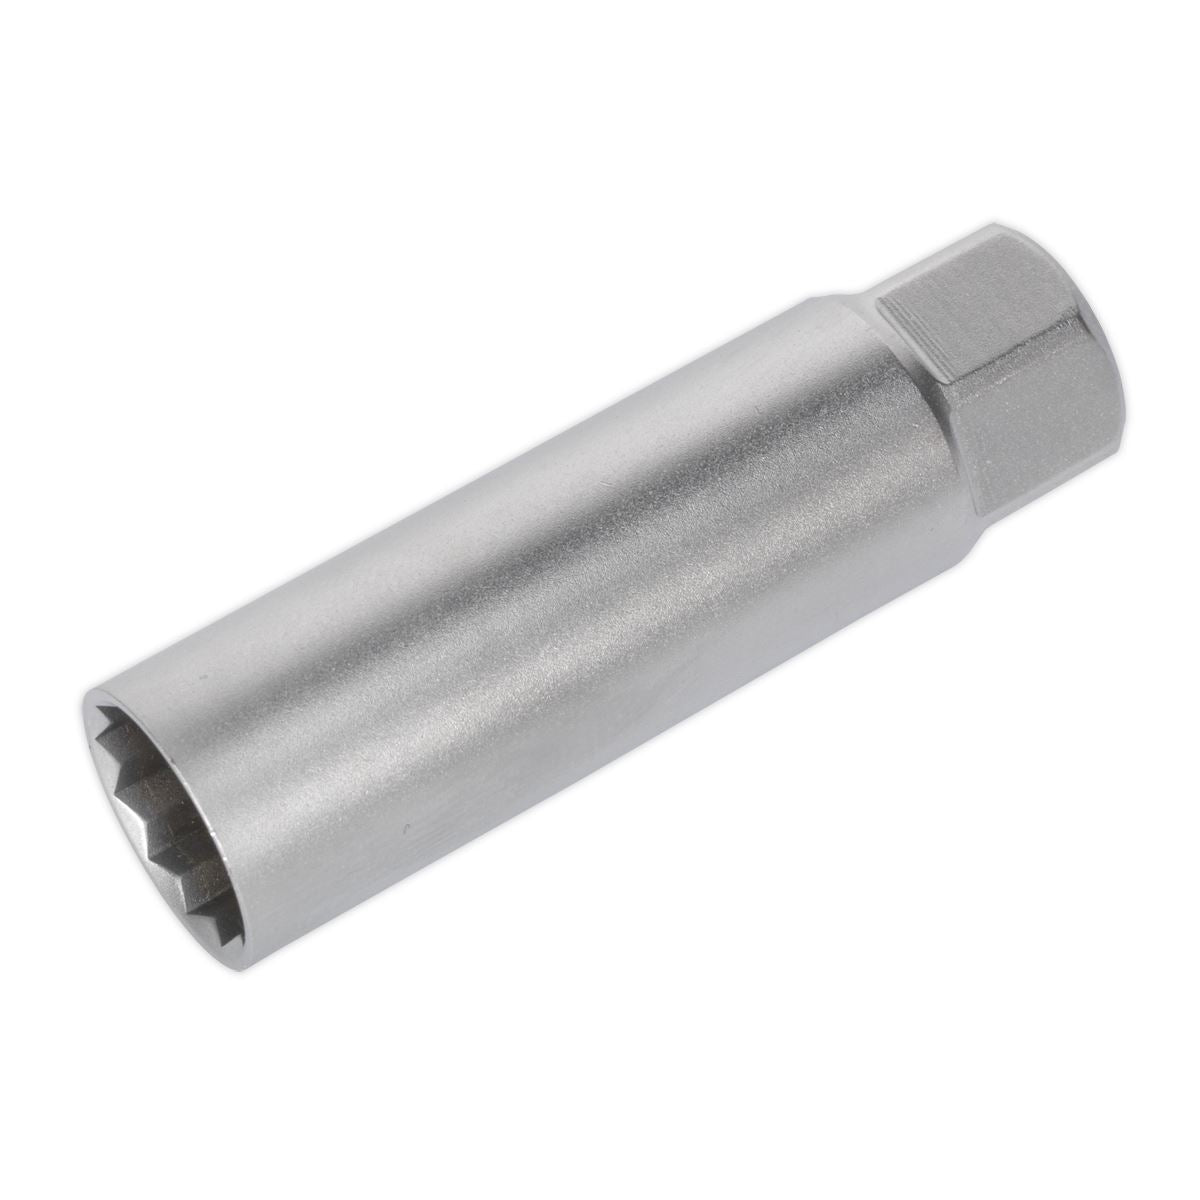 Sealey Spark Plug Socket 14mm 3/8"Sq Drive 12-Point